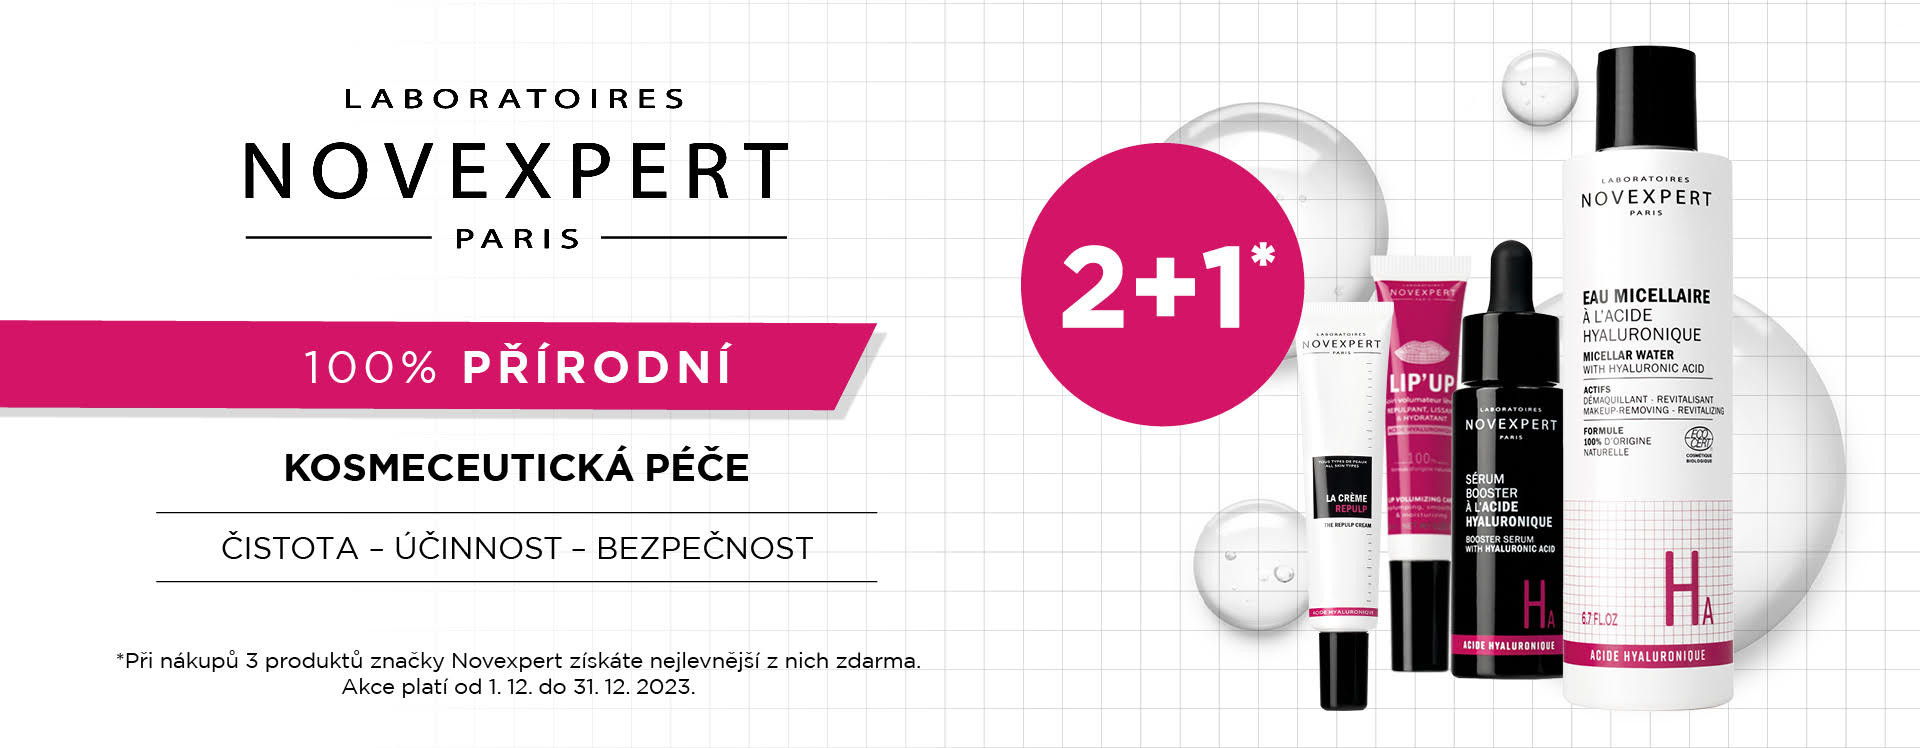 Onlinelekarna.cz | Novexpert 3za2